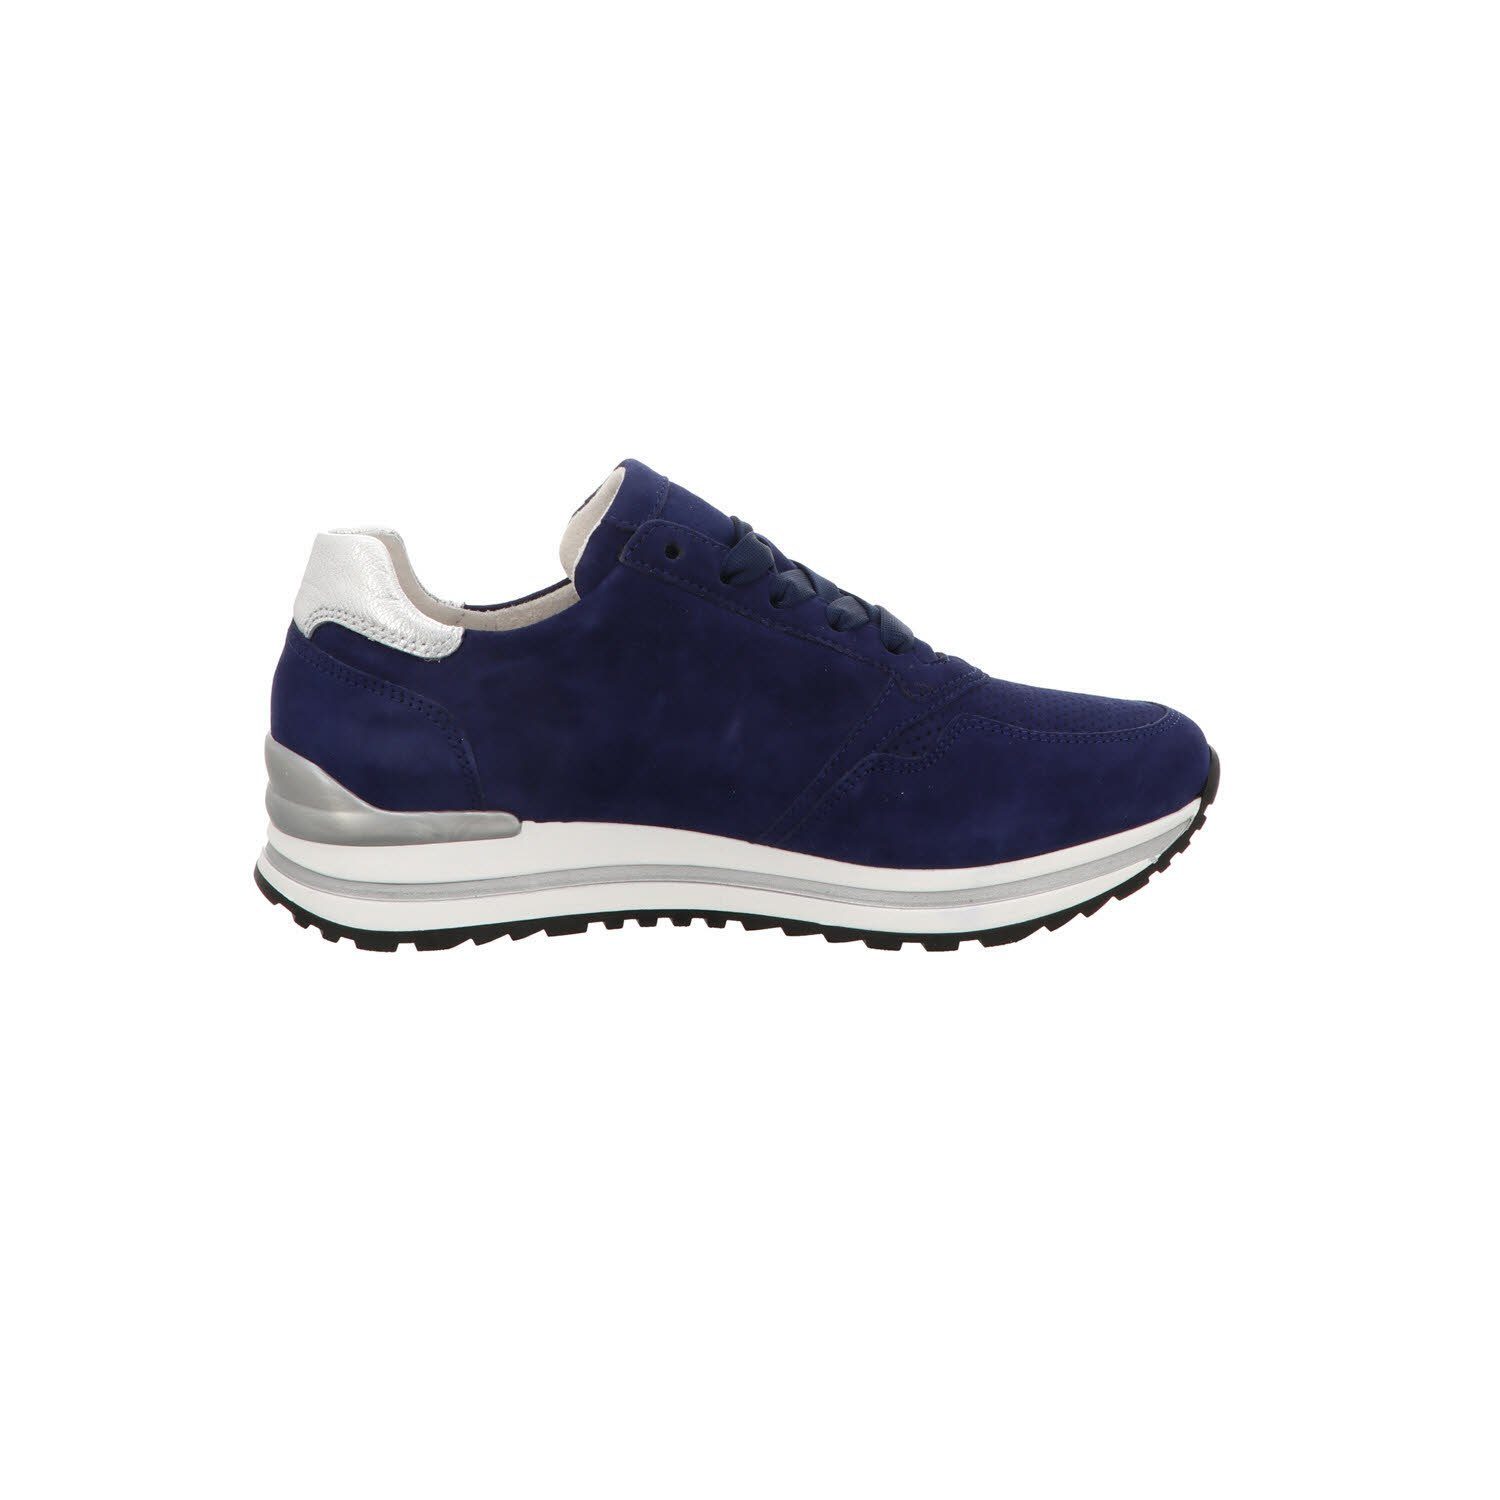 (oceano/silber) Gabor Sneaker Blau